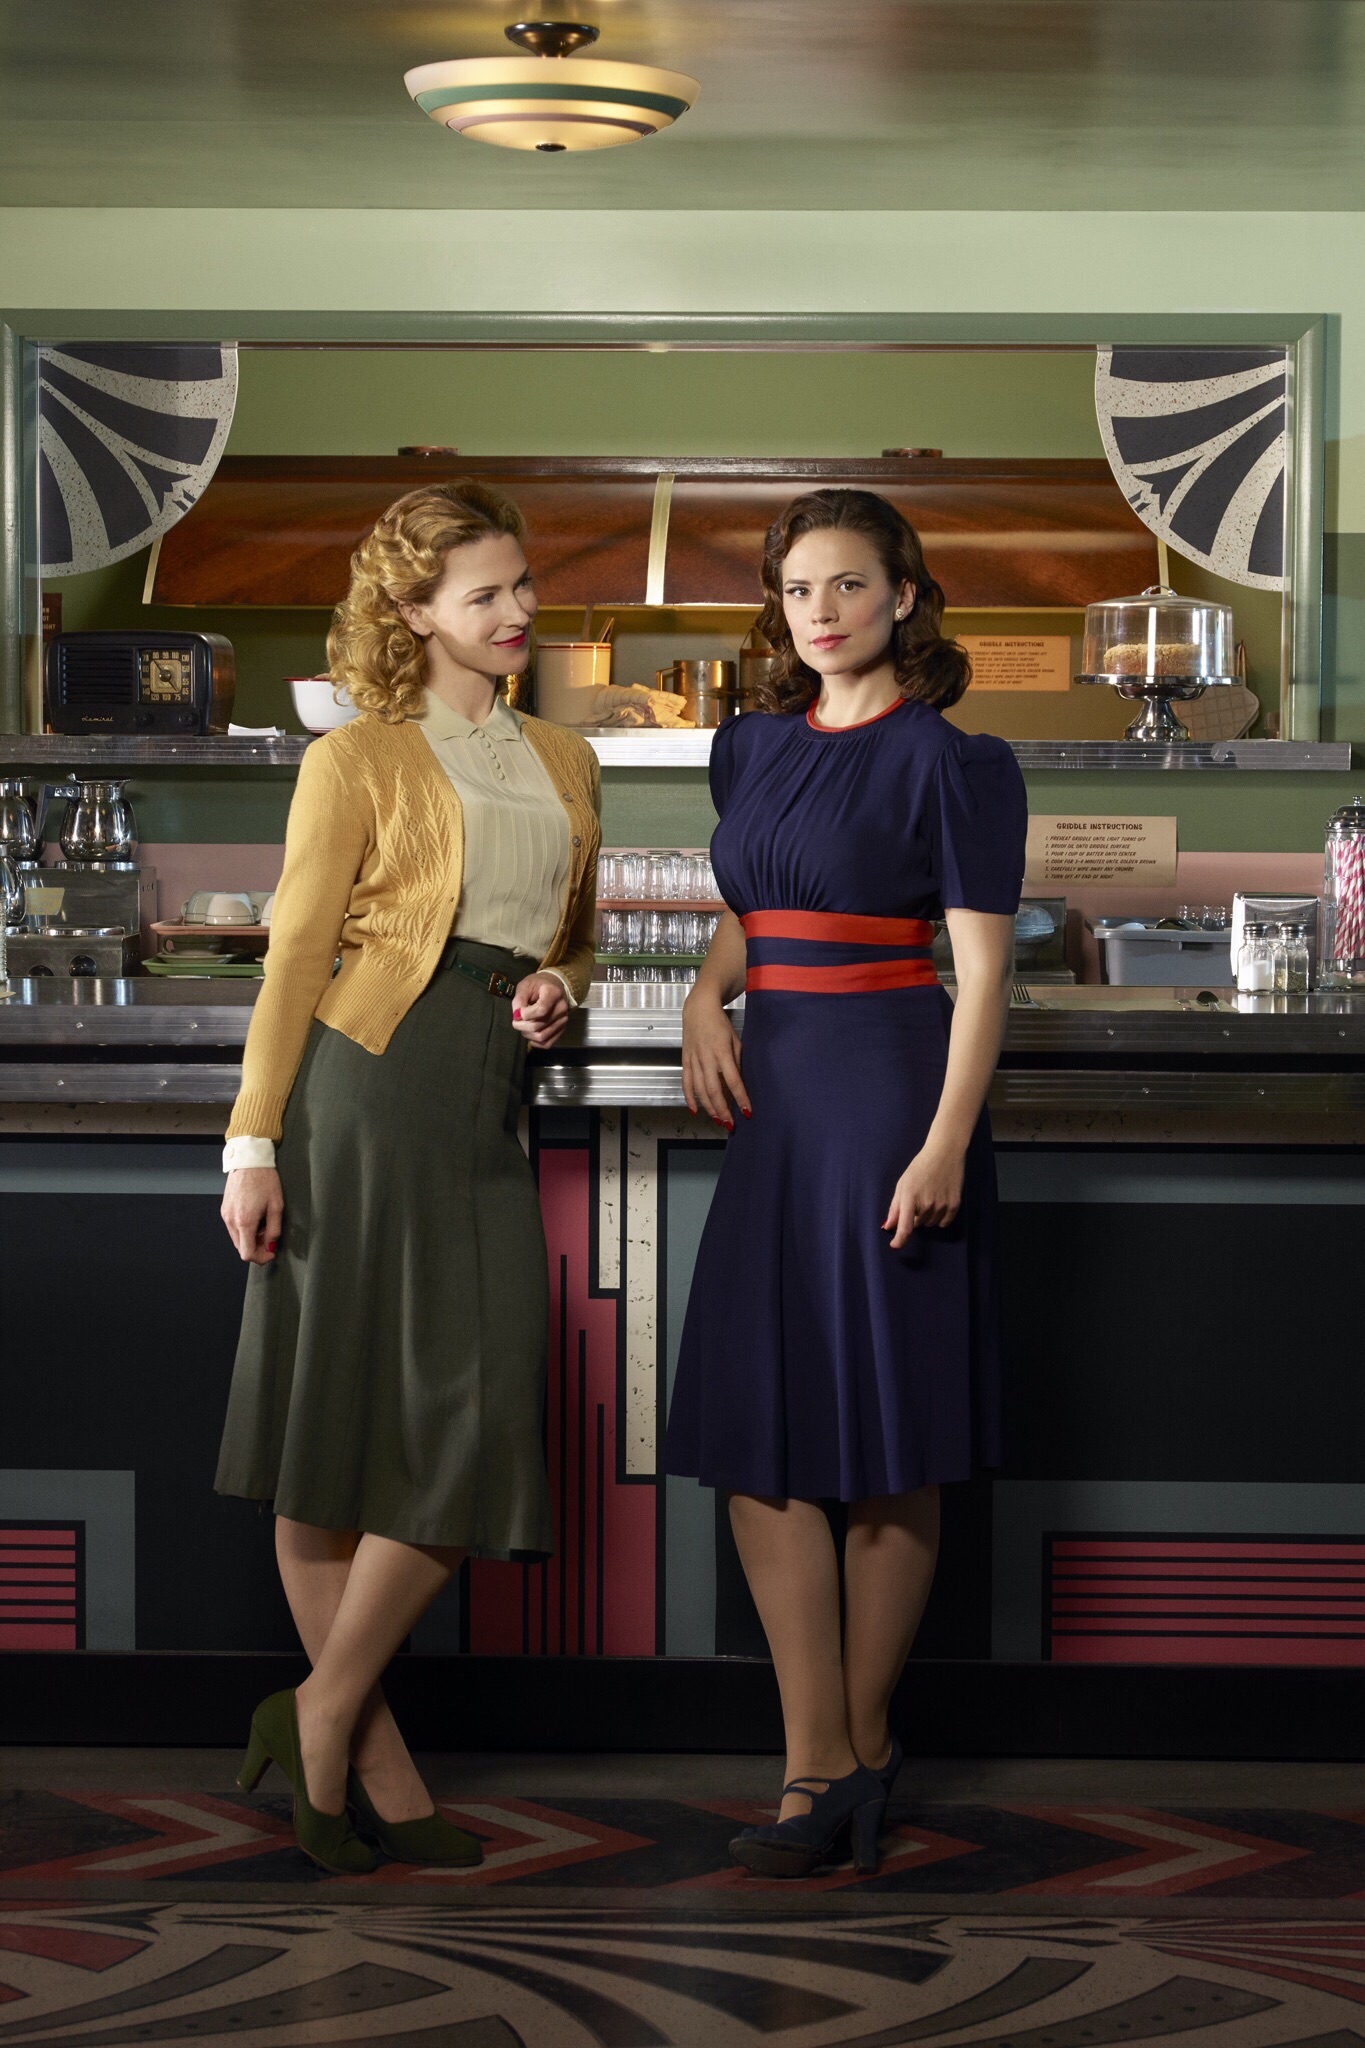 Still of Bridget Regan and Hayley Atwell in Agent Carter